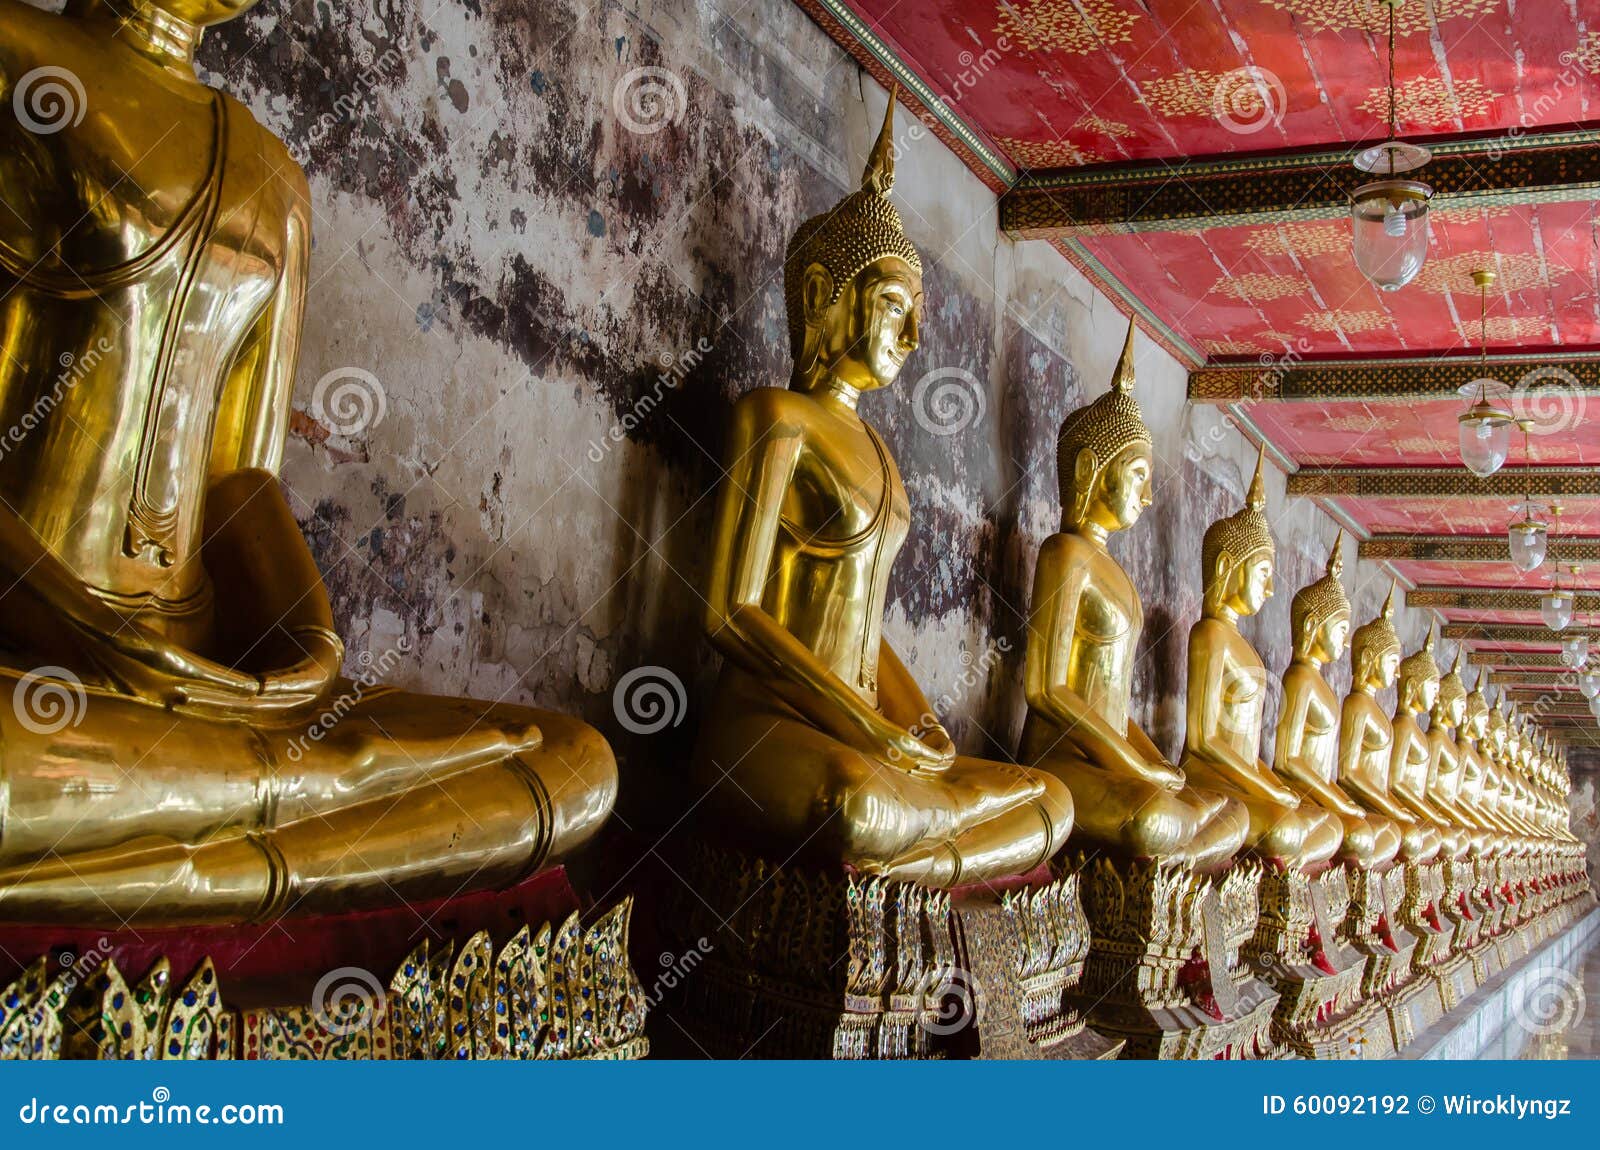 veranda of gild buddha sculptures at wat suthat, bangkok of thailand.